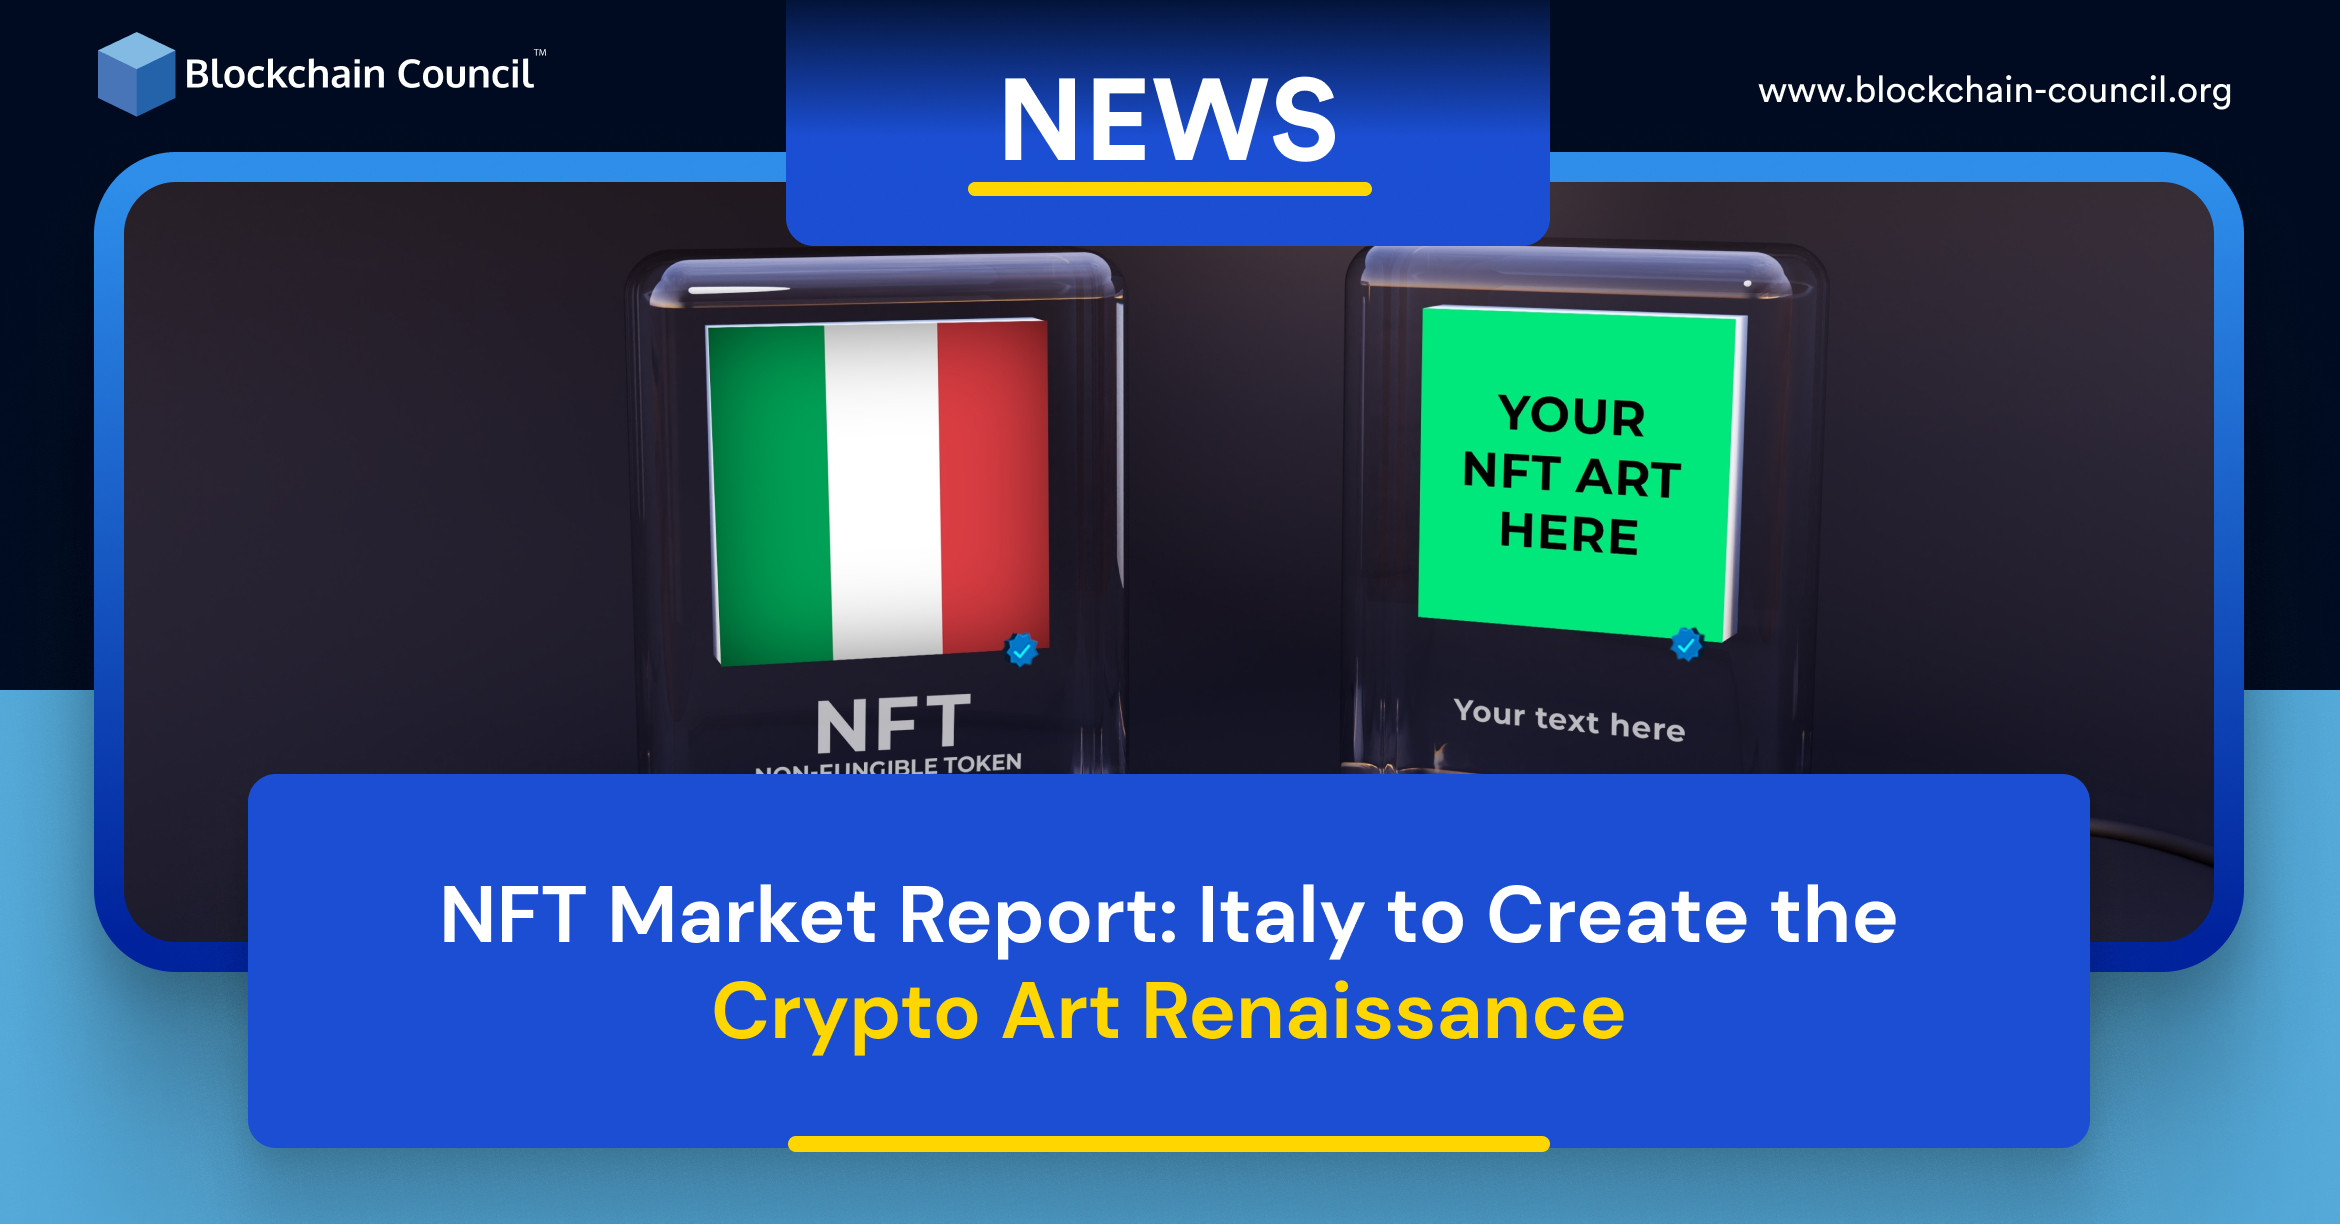 NFT Market Report: Italy to Create the Crypto Art Renaissance